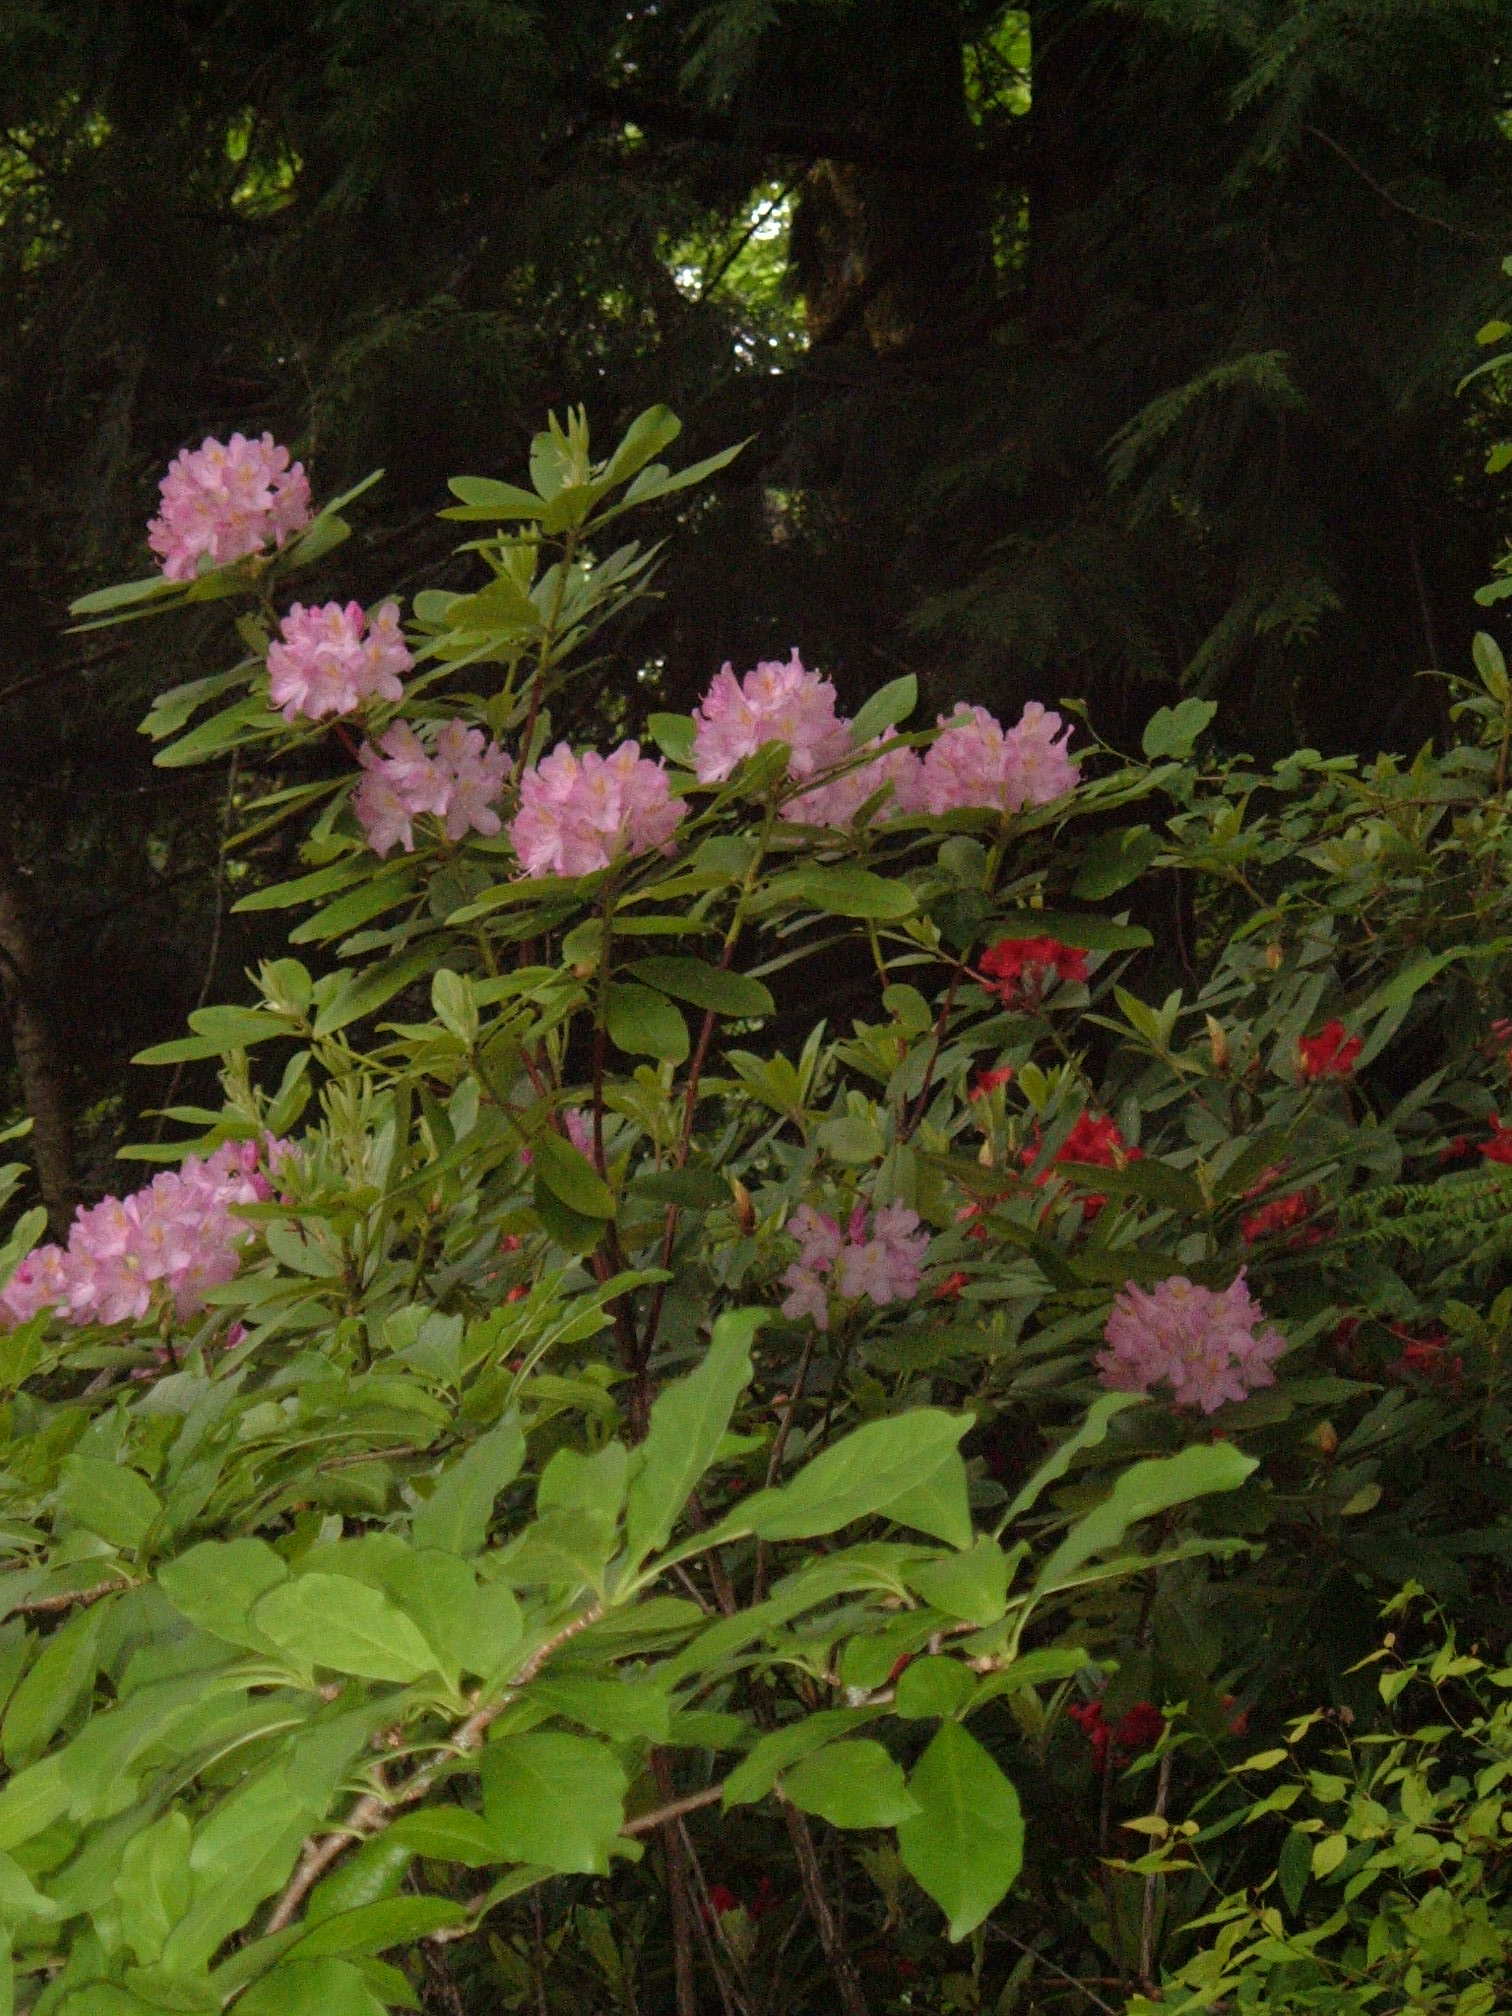 Rhododendron in landscape near woods